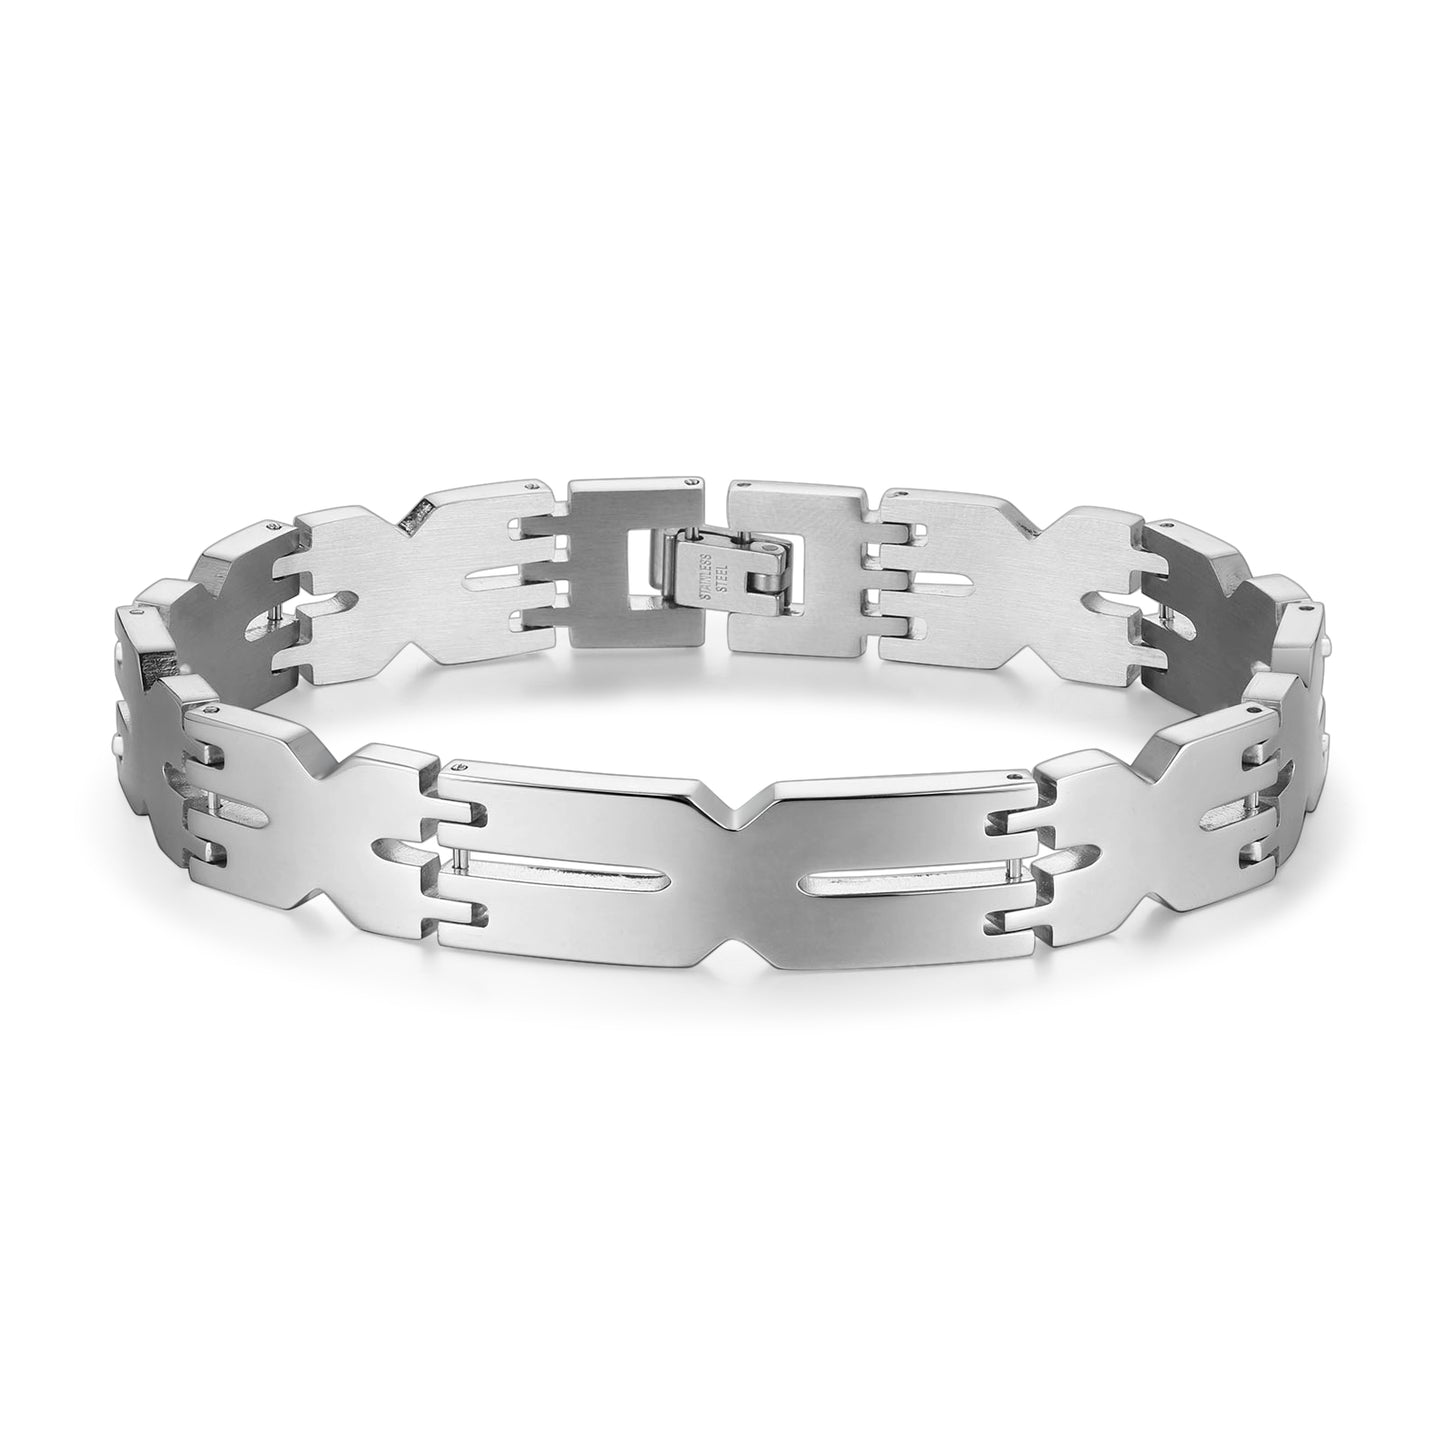 Personlized Stainless Steel Bracelet